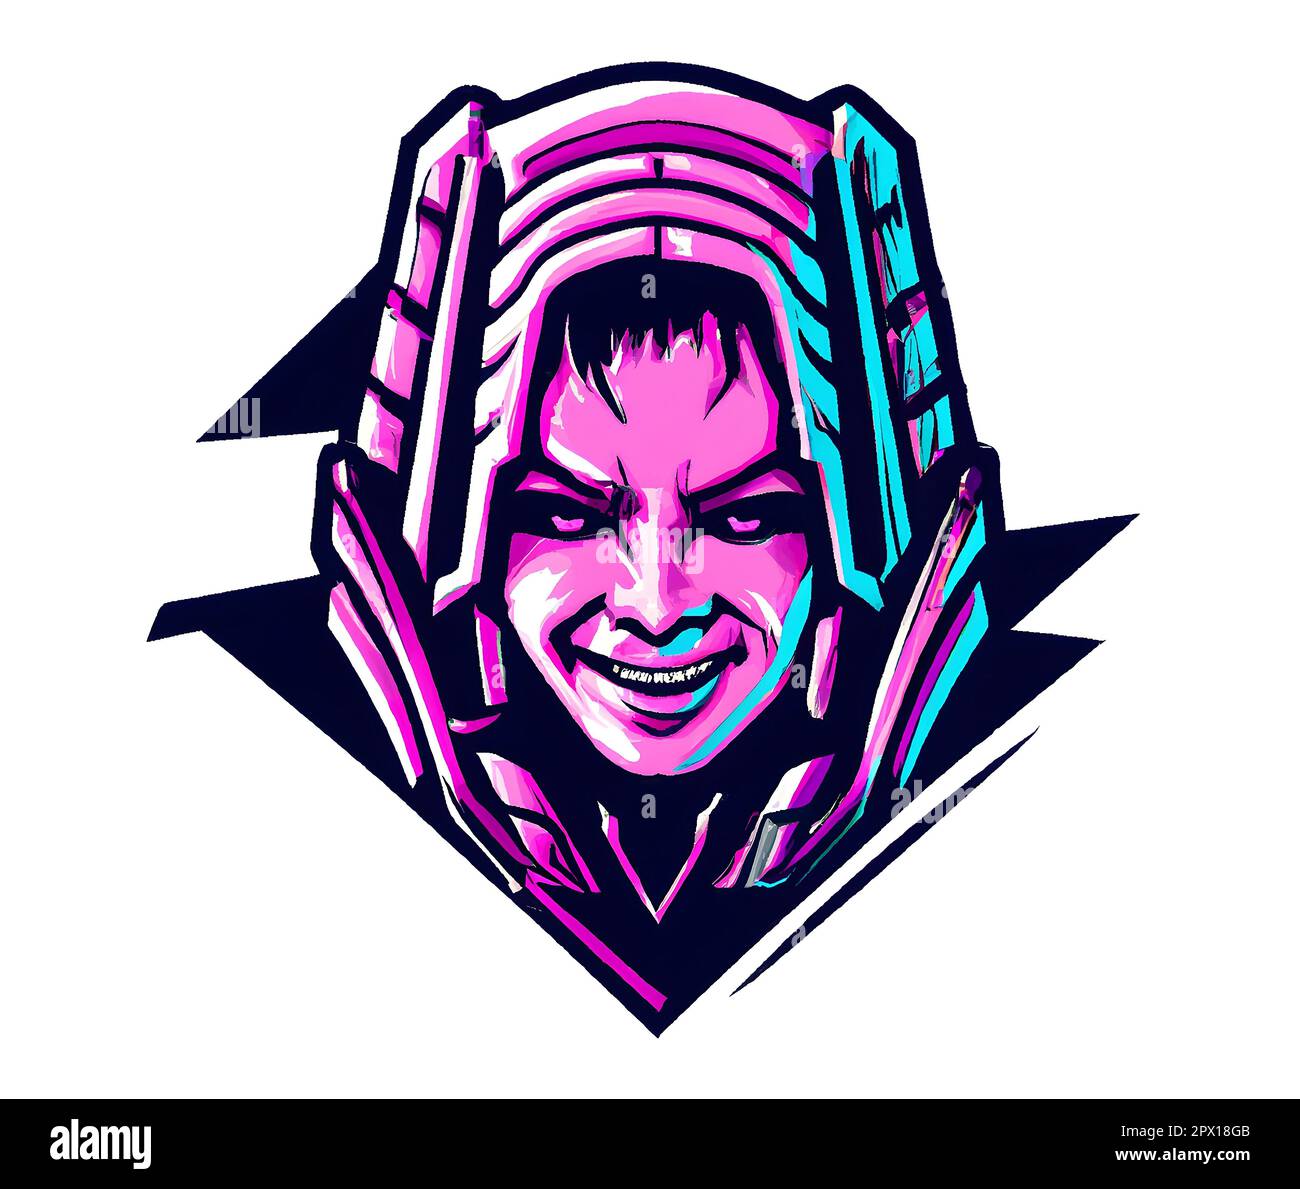 Illustration of creepy smiling woman face, cyberpunk style illustration. Stock Photo